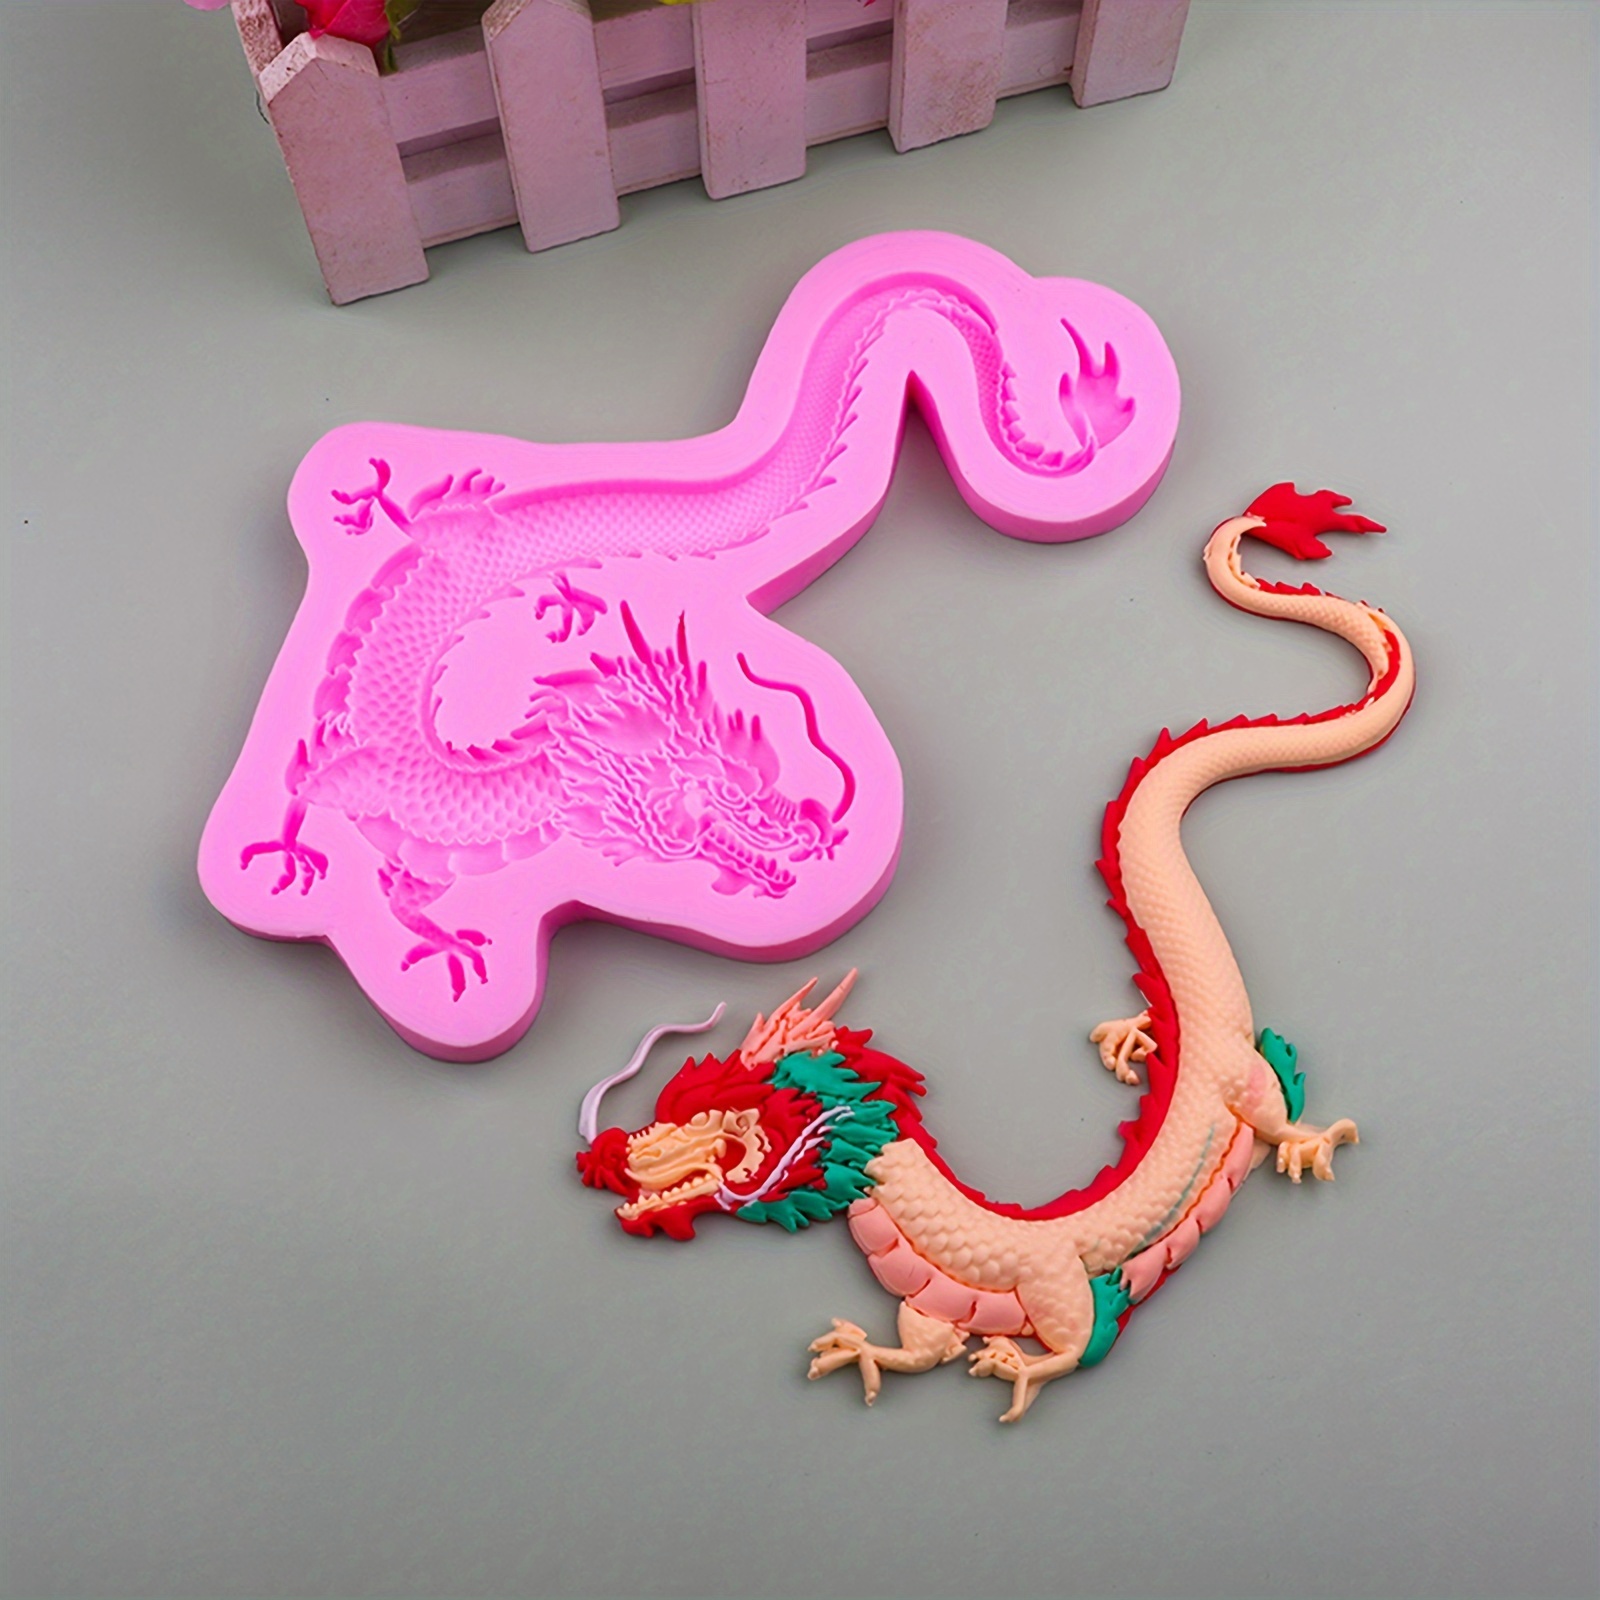 Baby Dragon Silicone Mold Lizard Soap Mold Silicone Mold for